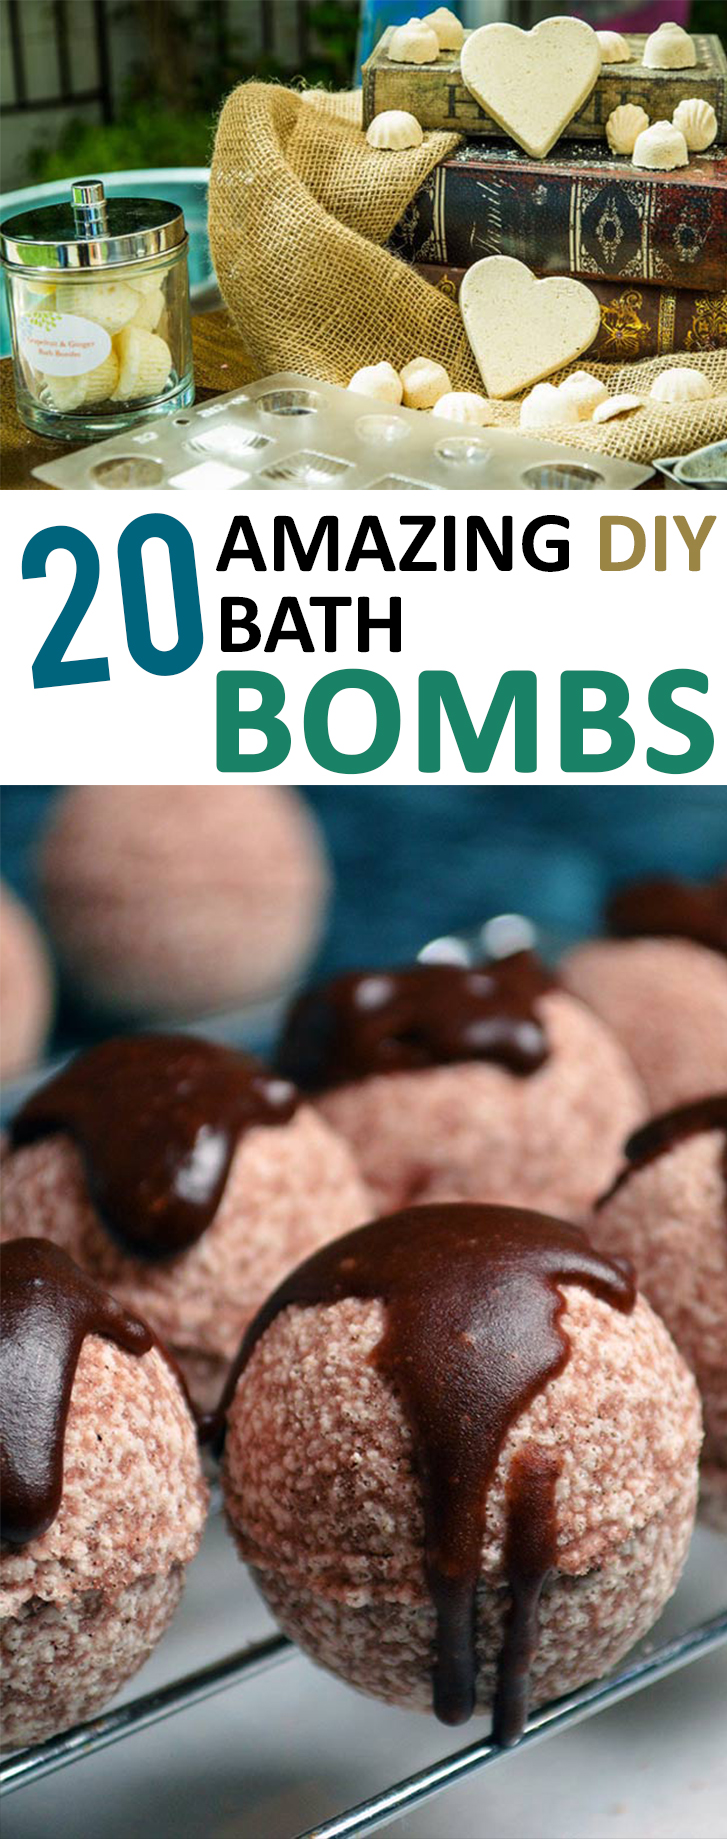 20 Amazing DIY Bath Bombs